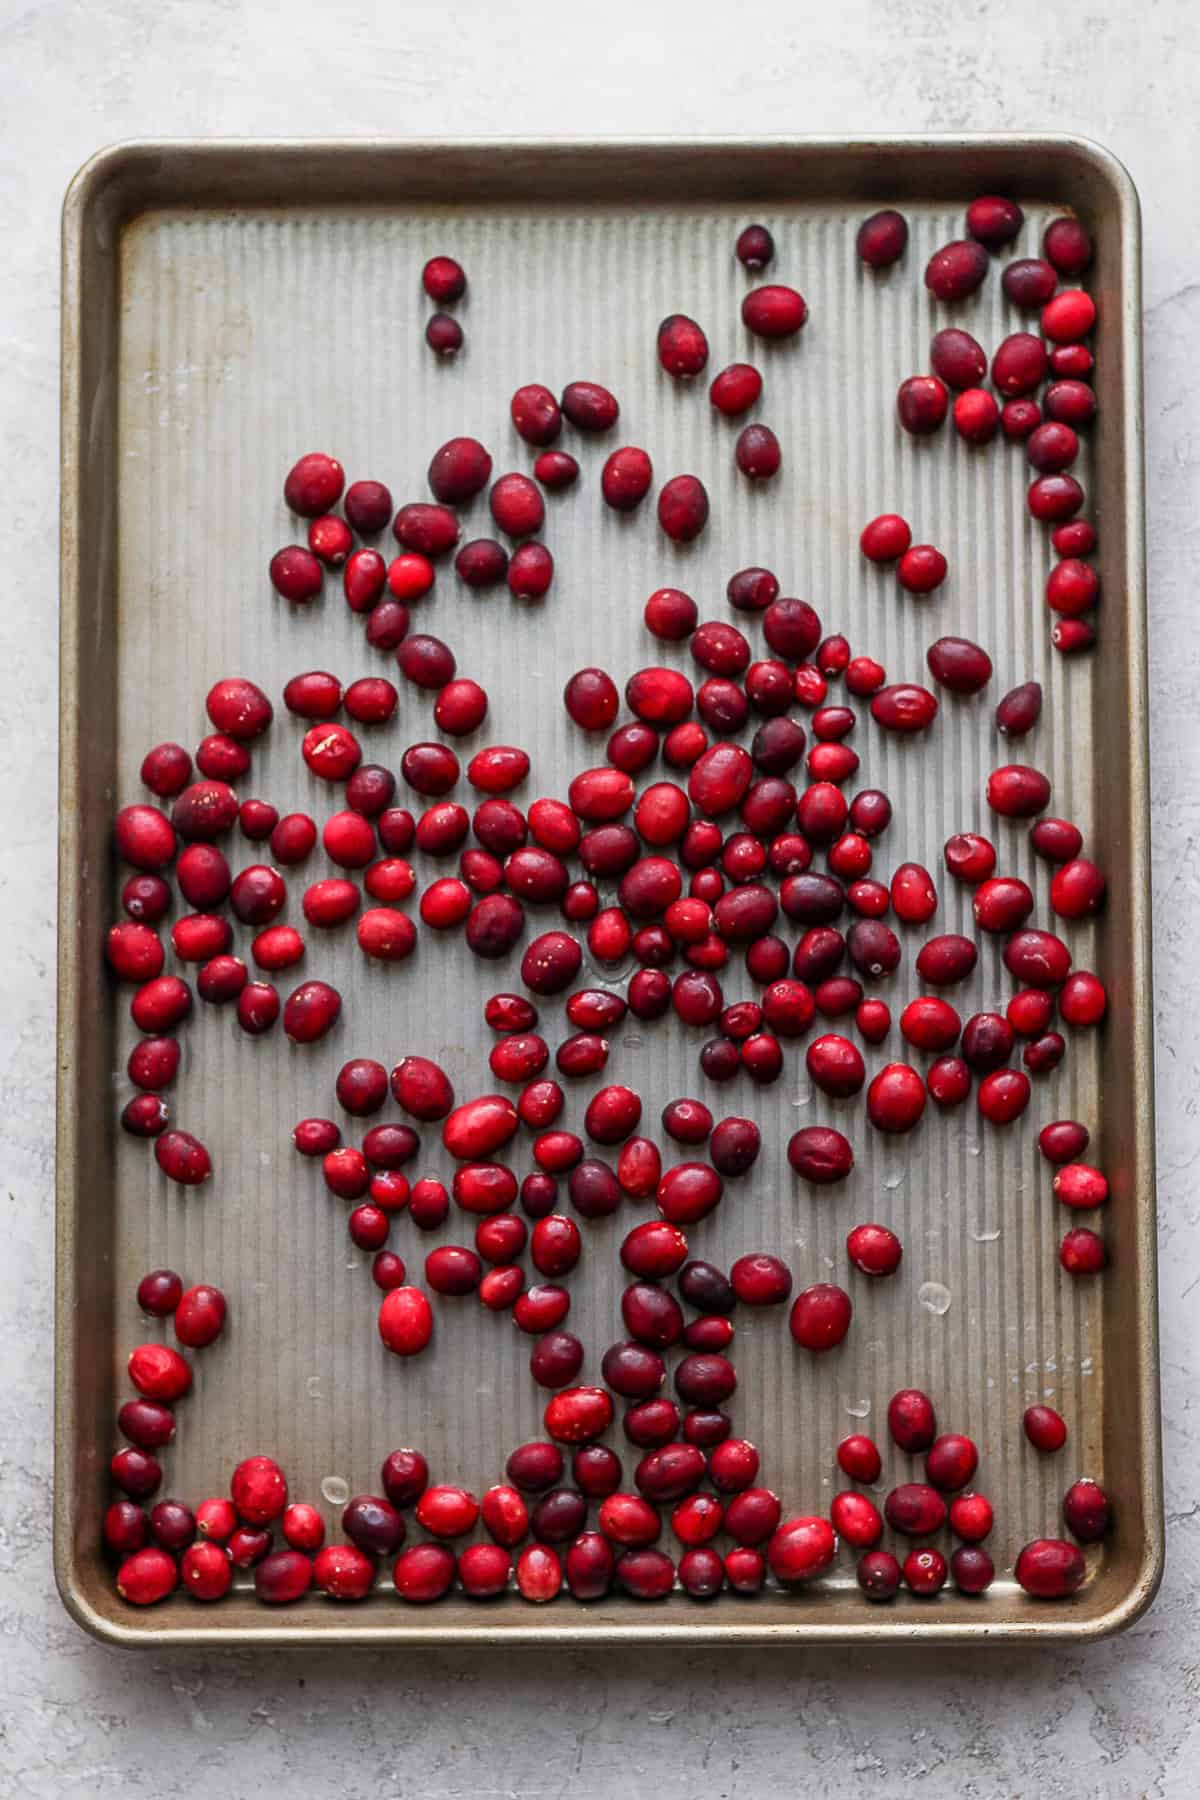 Cranberries on baking sheet after frozen